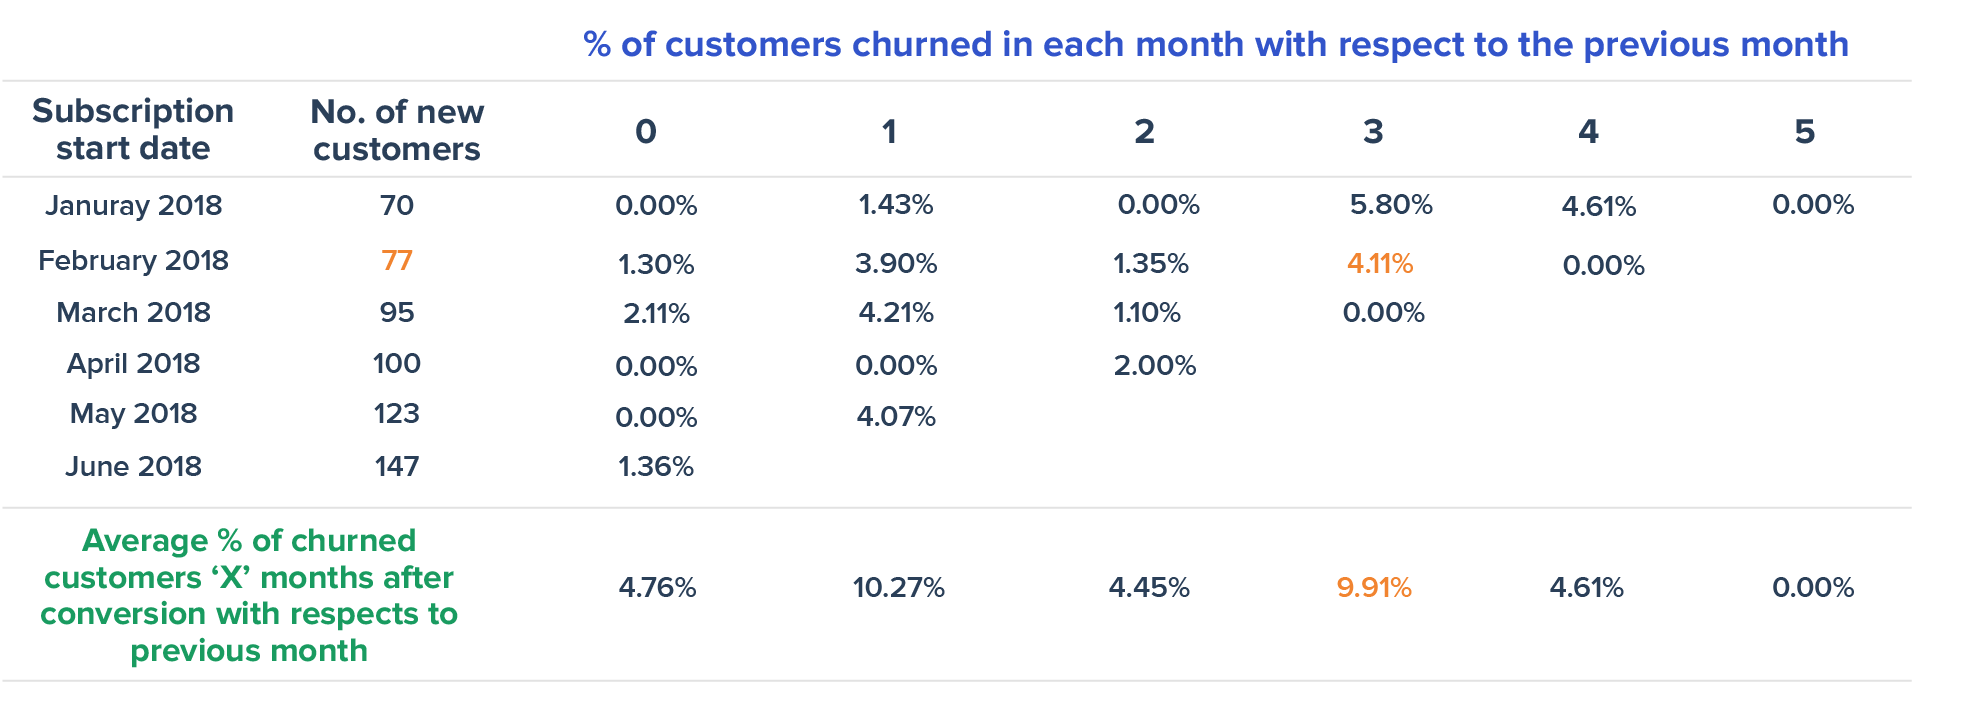 Cohort Analysis - Customer churn